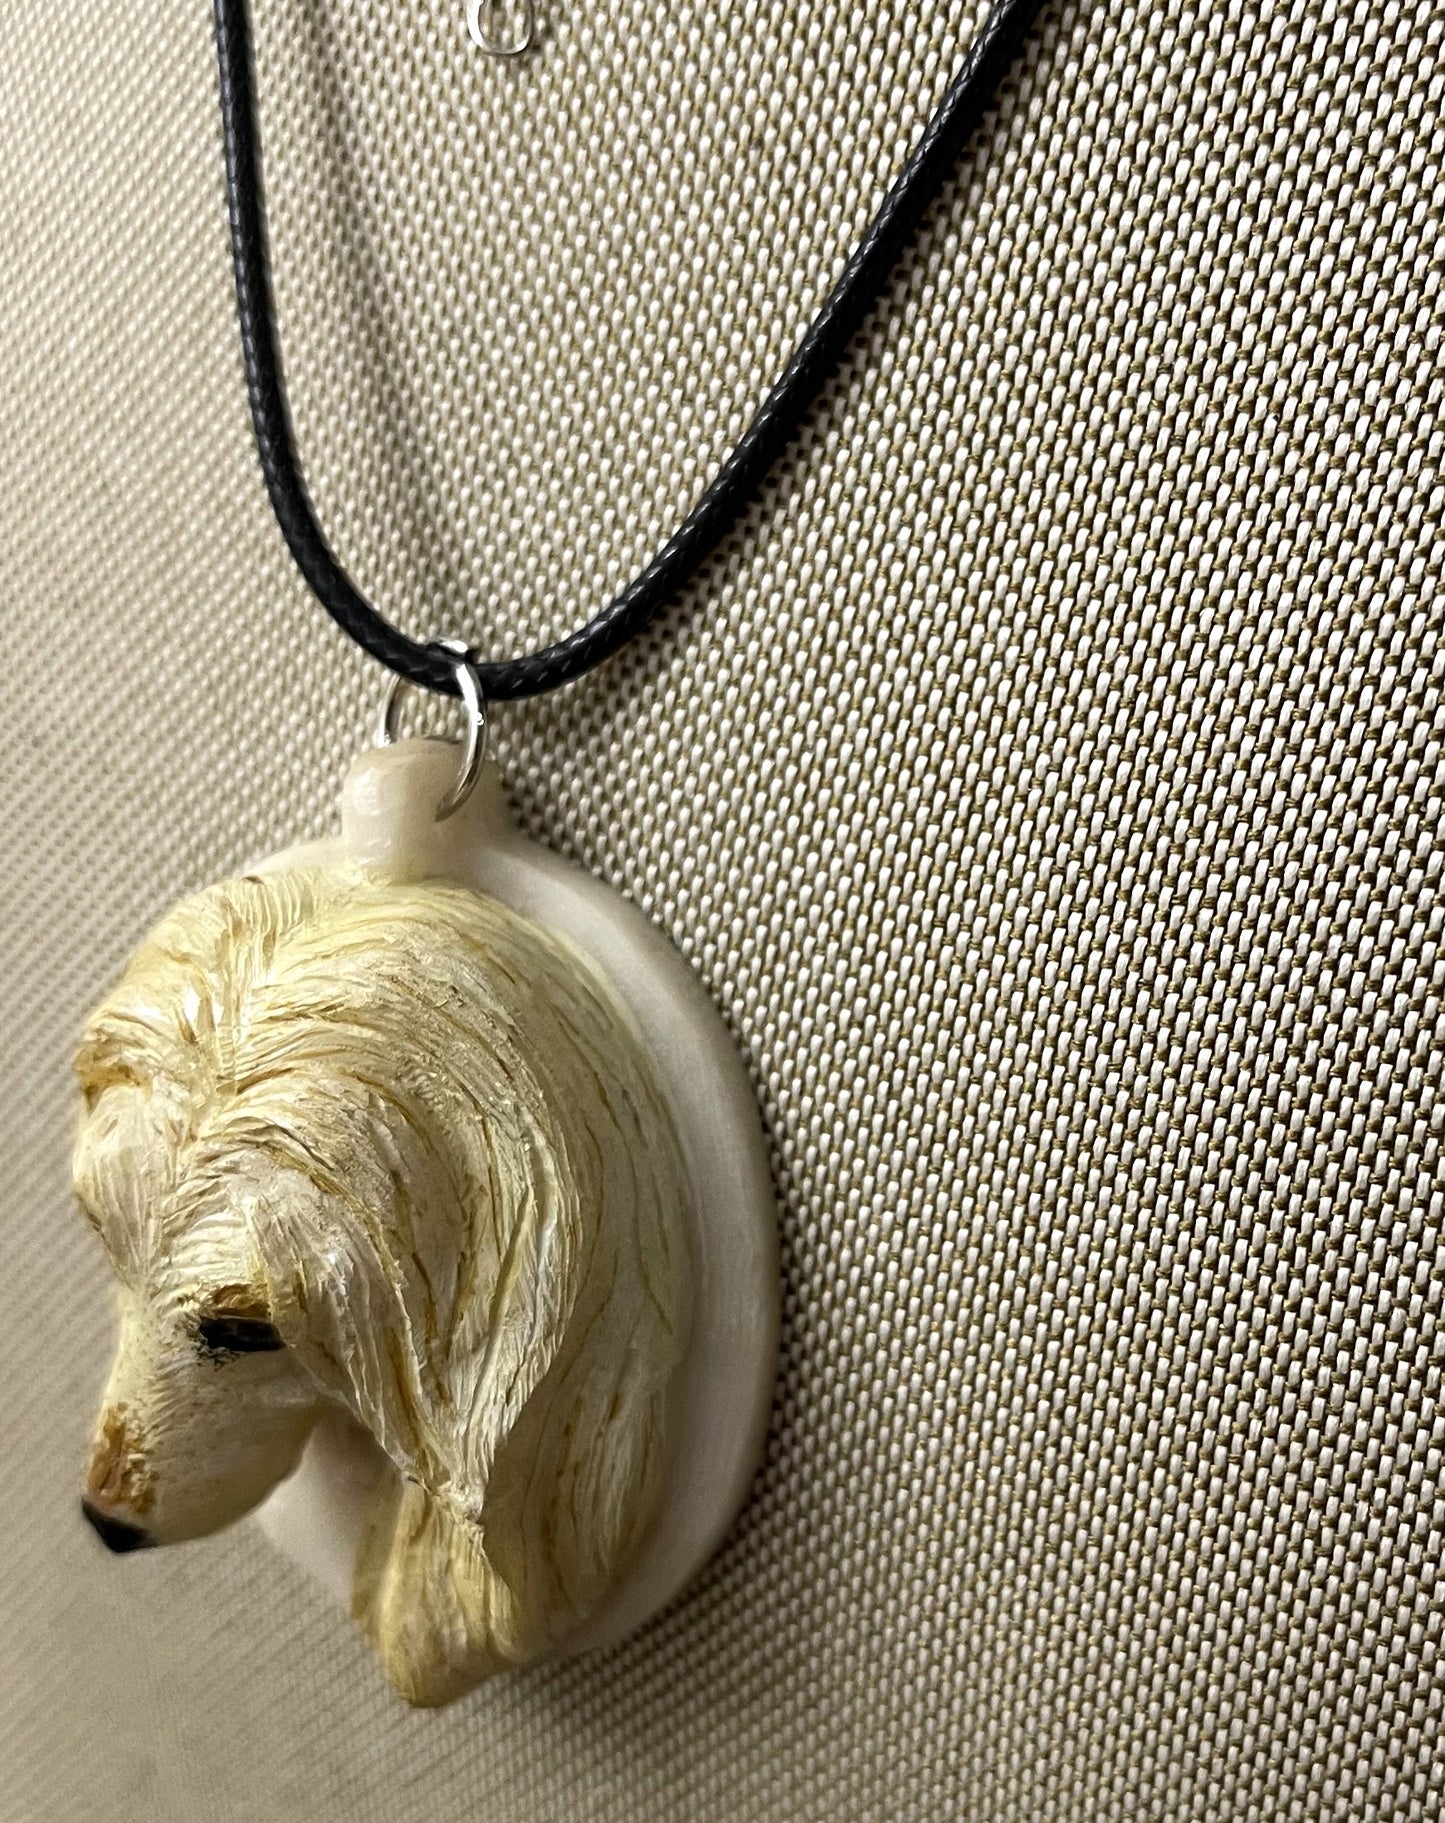 Dog Carved Necklace Pendant Panama